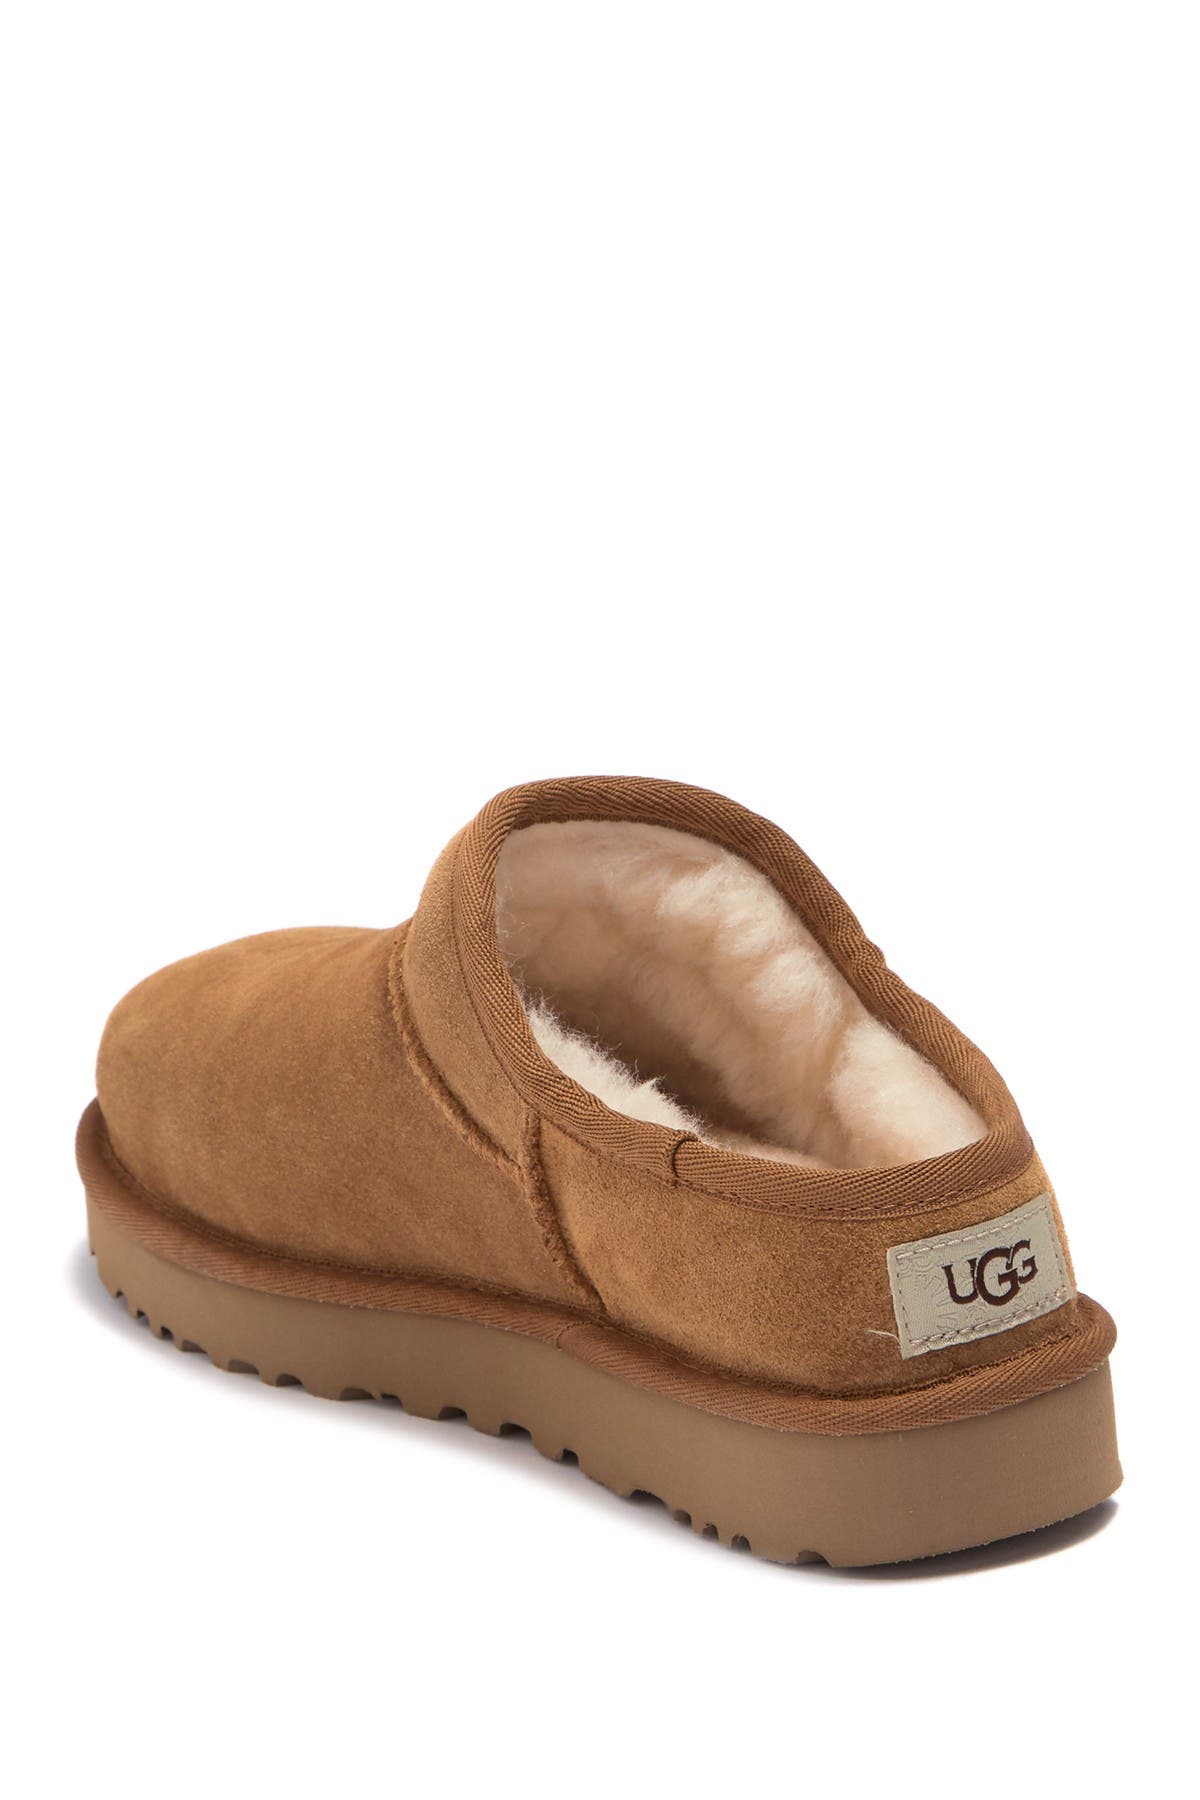 ugg classic ugg slippers women